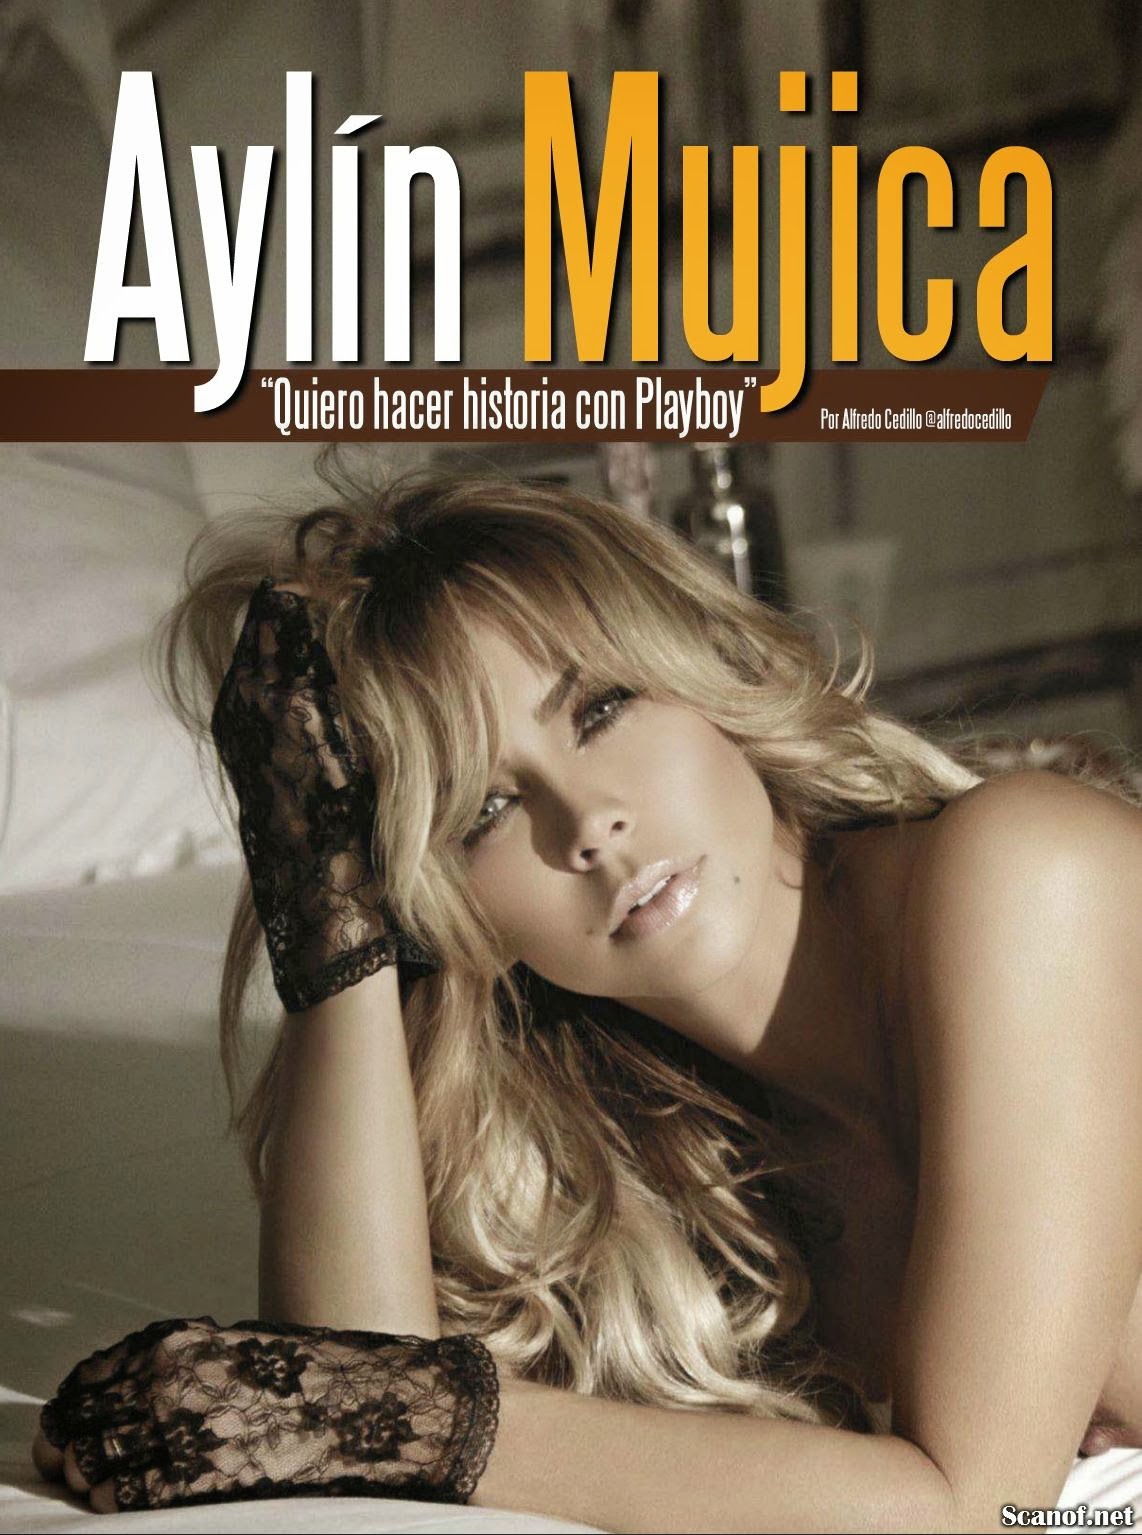 Aylin Mujica Playboy Venezuela July 2013.